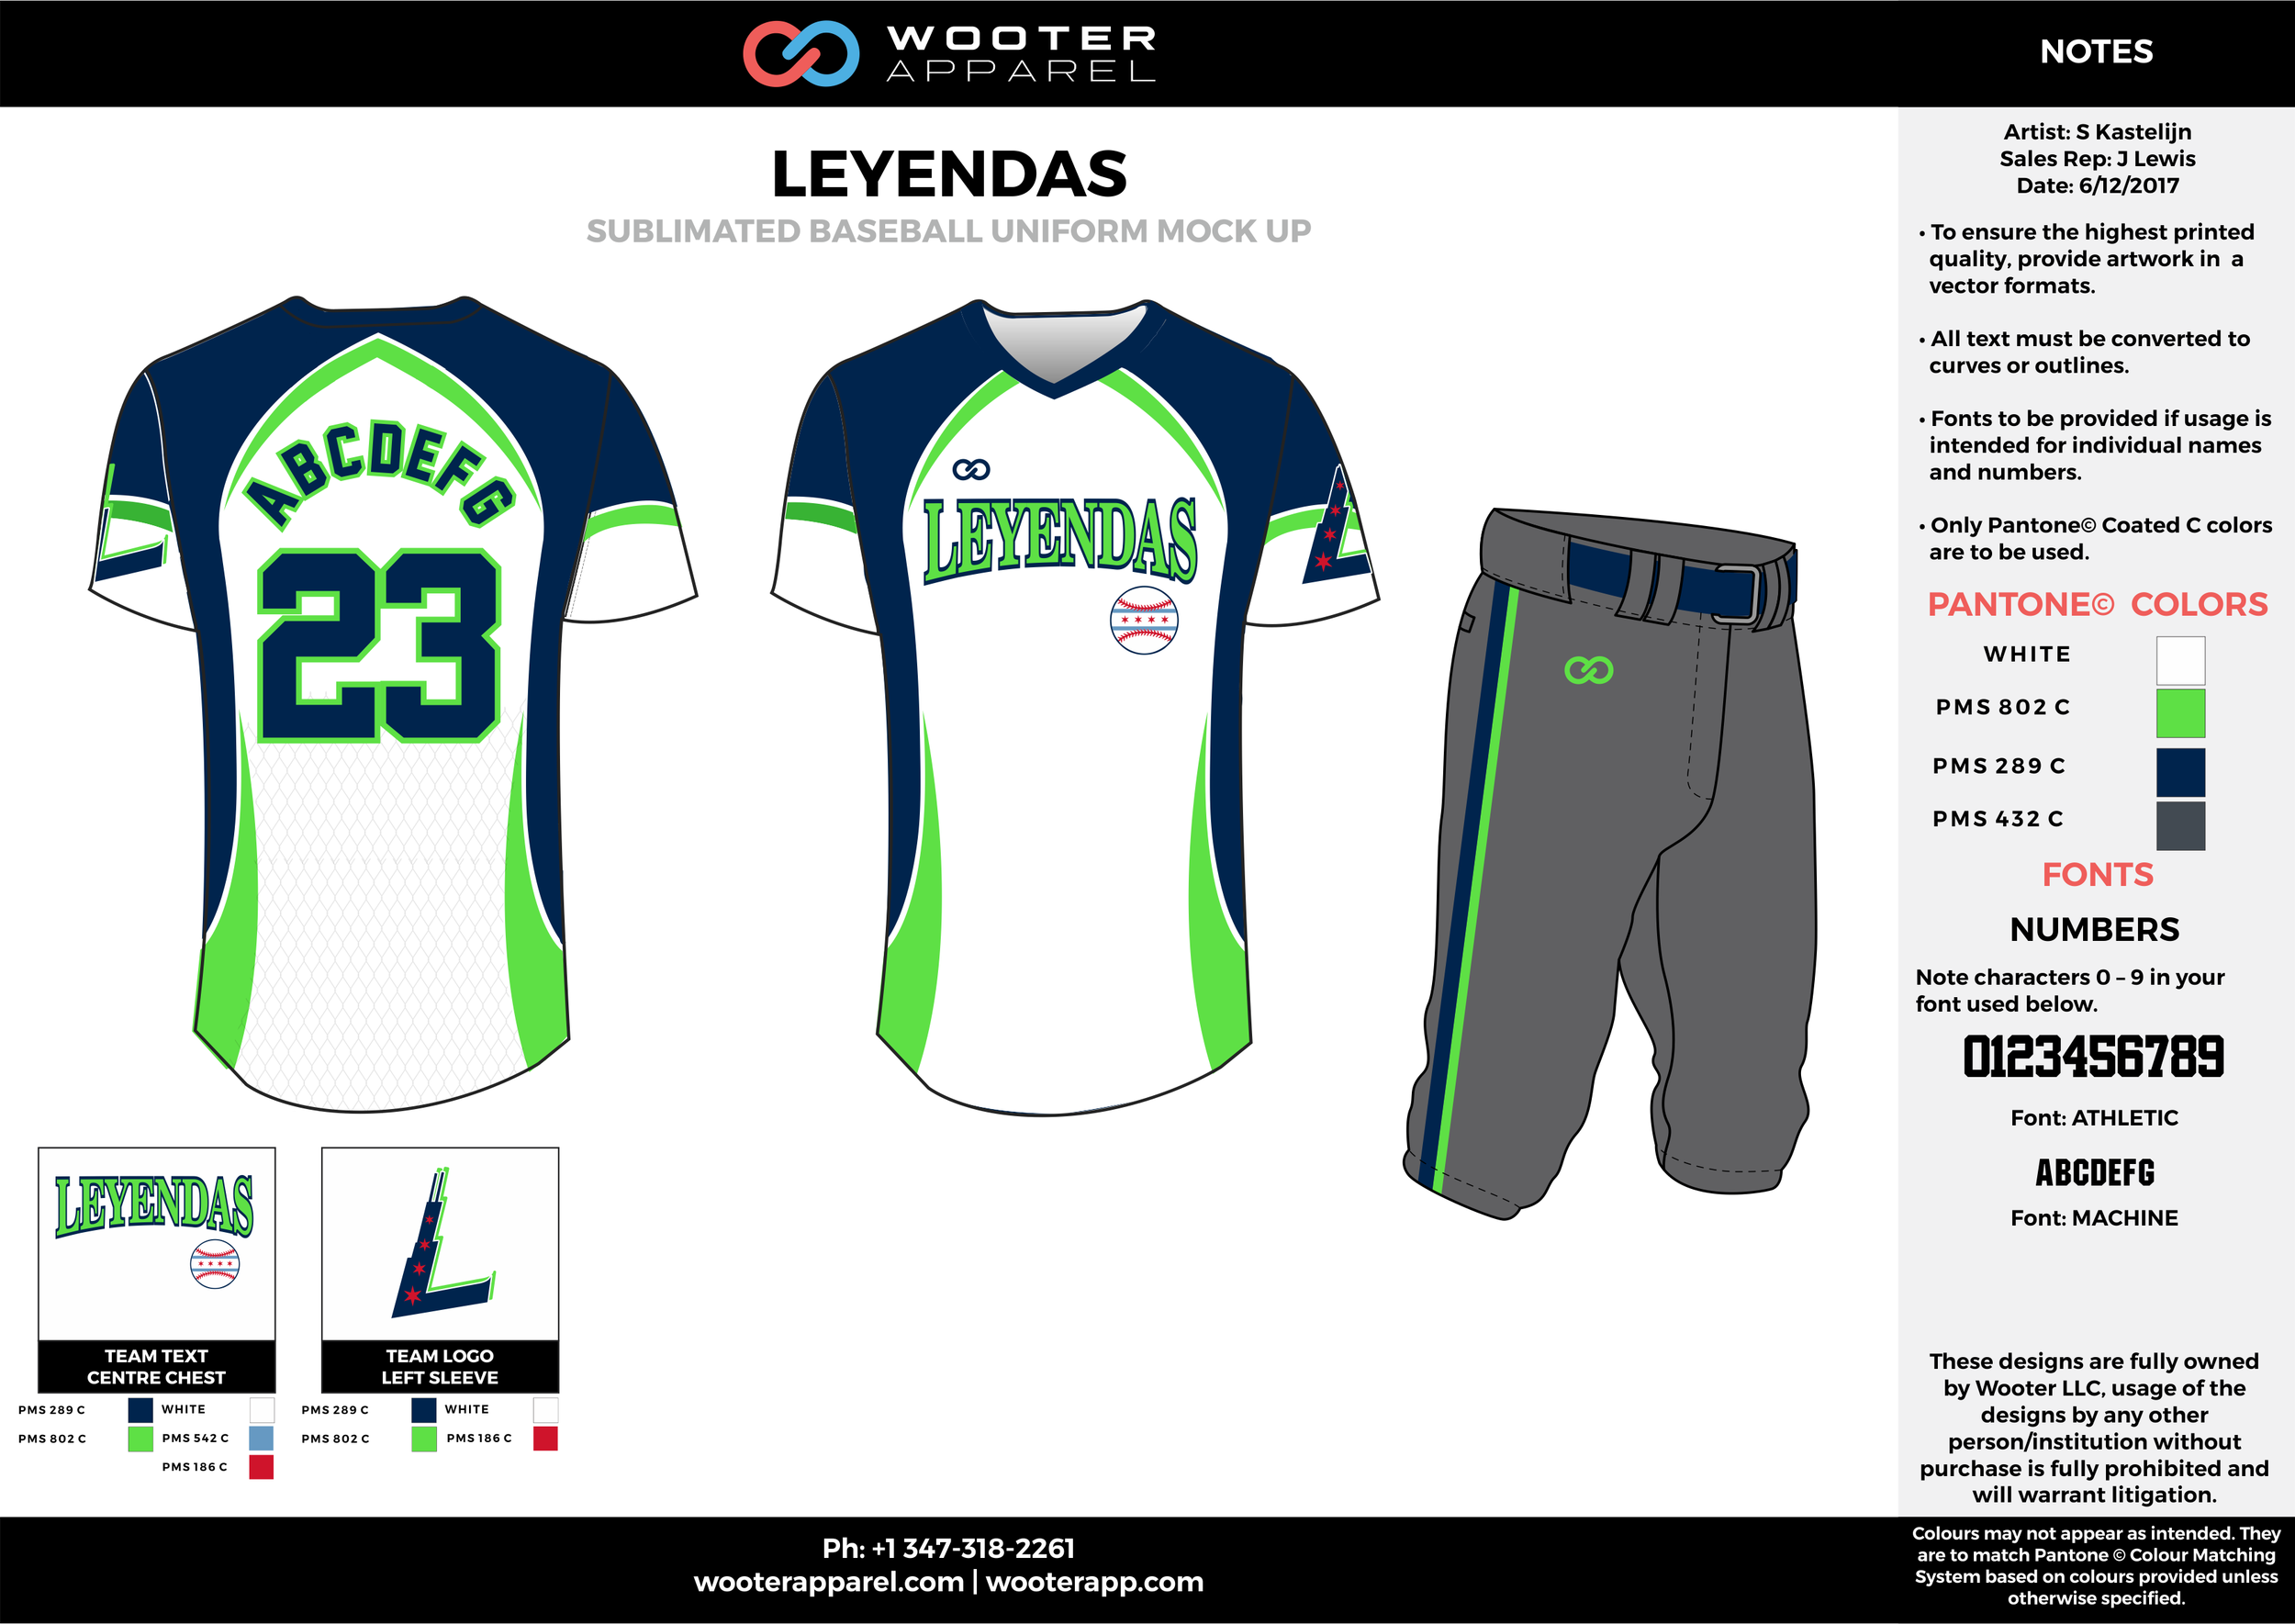 lime green baseball jersey